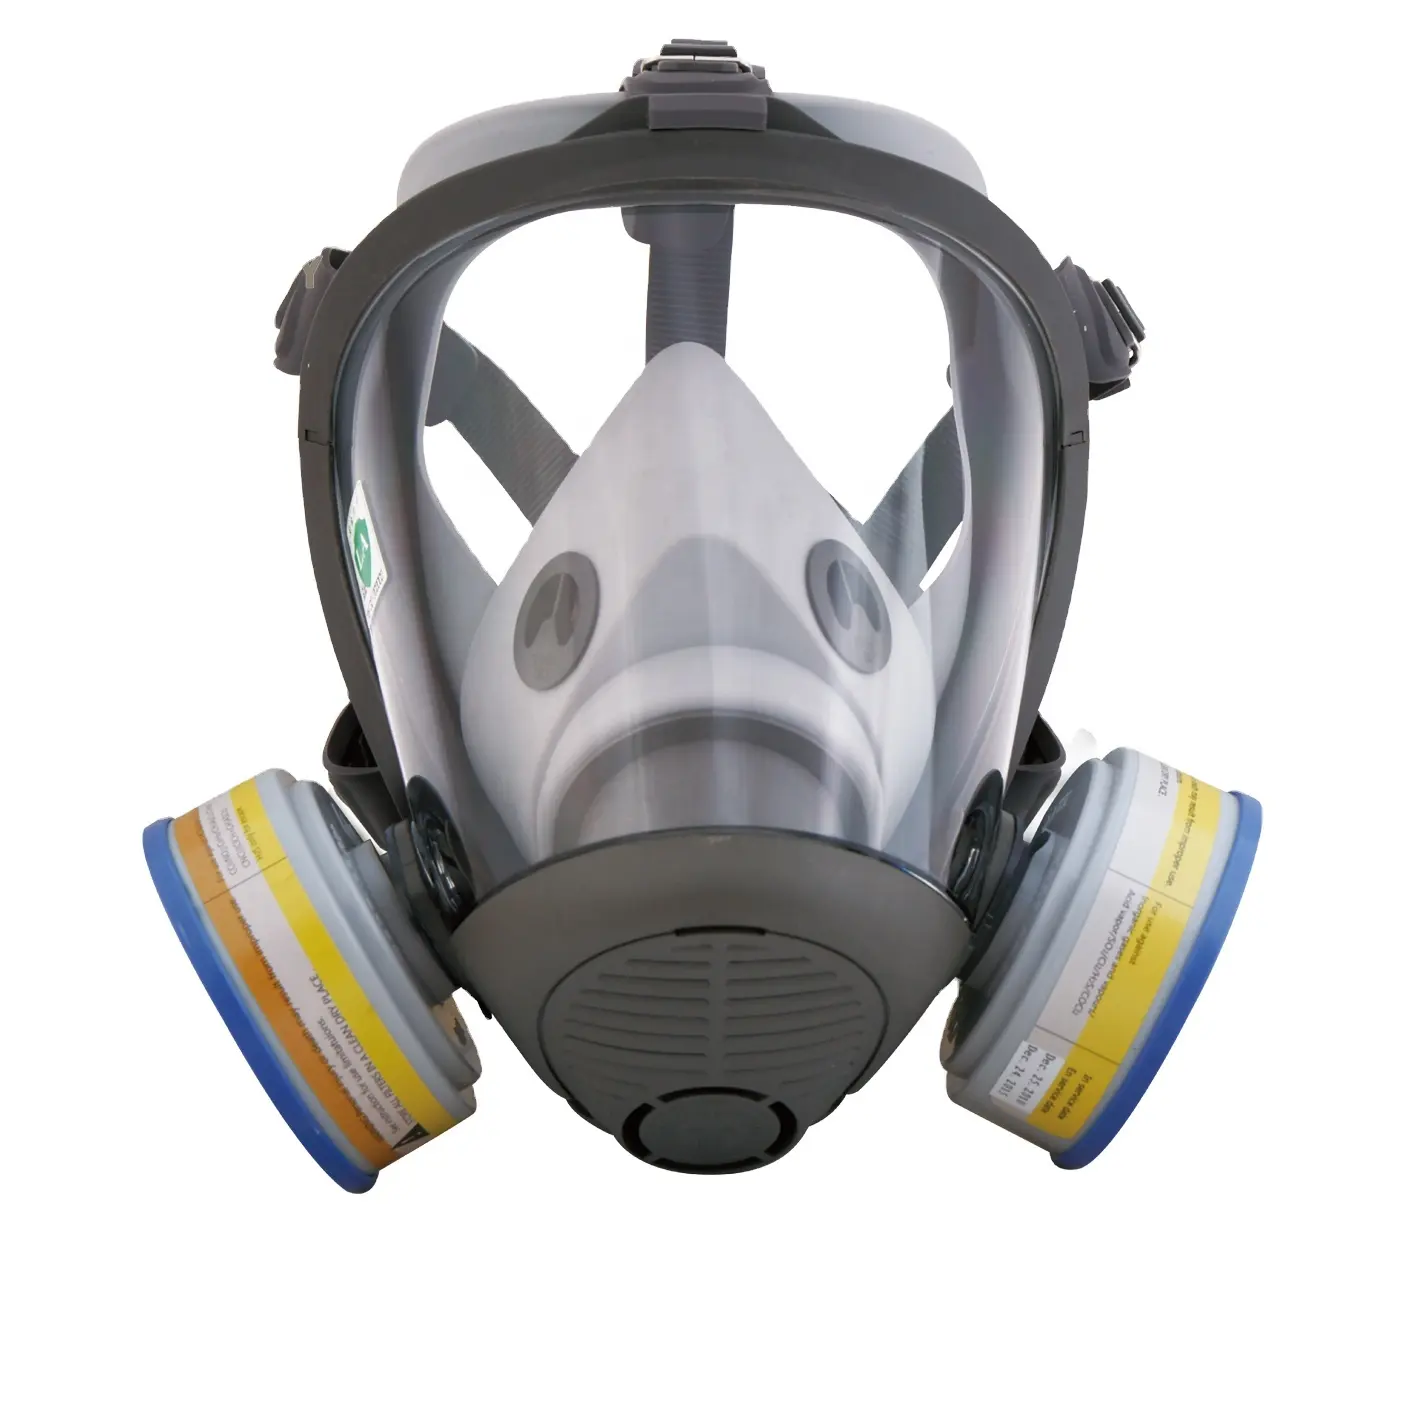 Aperfeiçoe a máscara de gás facial completa do cone do silicone do projeto de duas camadas para a medicina científica química dos bombeiros com vasilha dobro